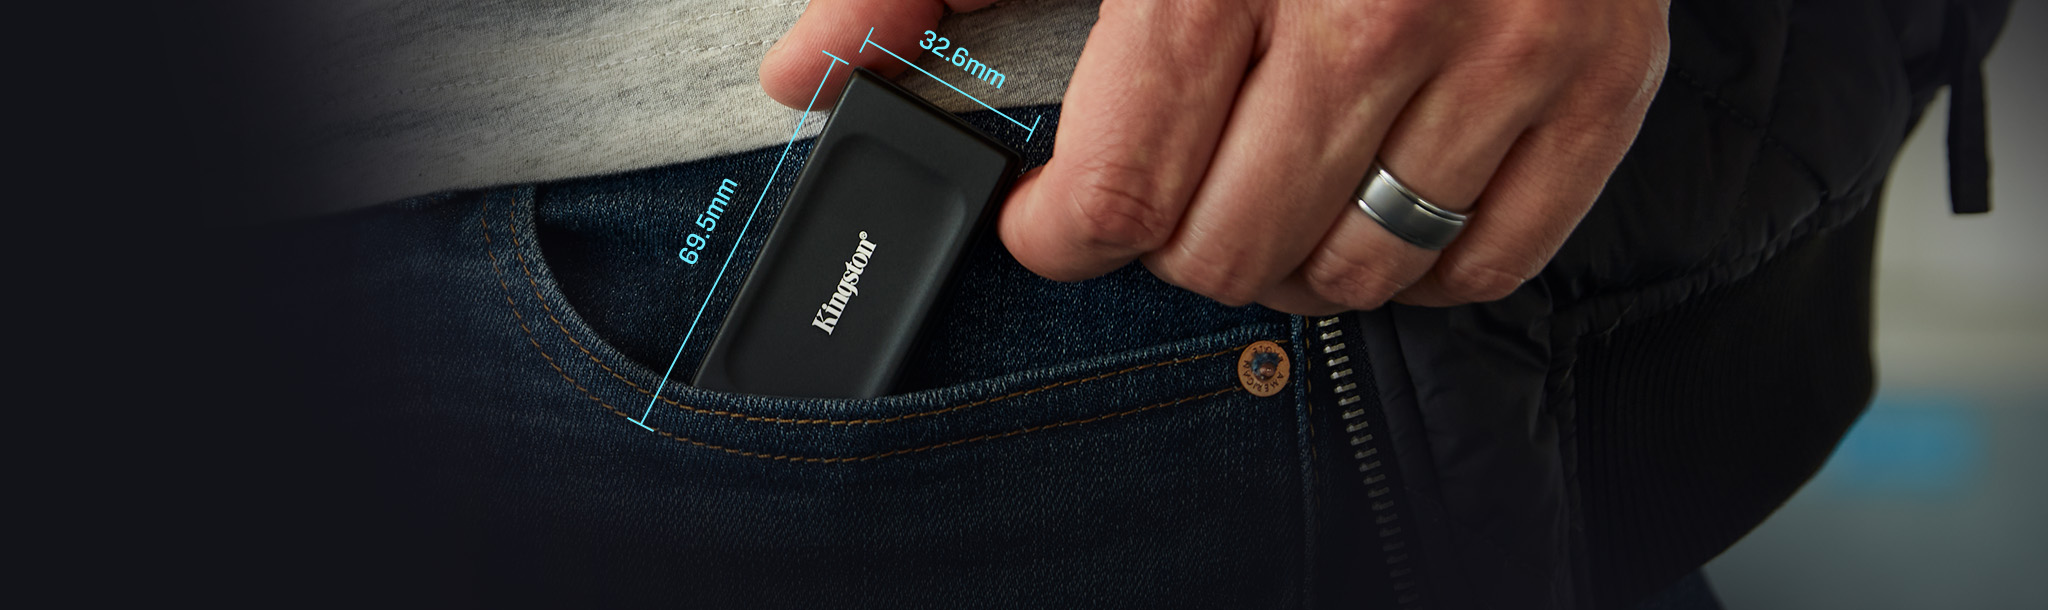 XS1000 휴대용 SSD를 들고 있는 손에 크기가 표시되어 있음: 69.54 x 32.58 x 13.5mm